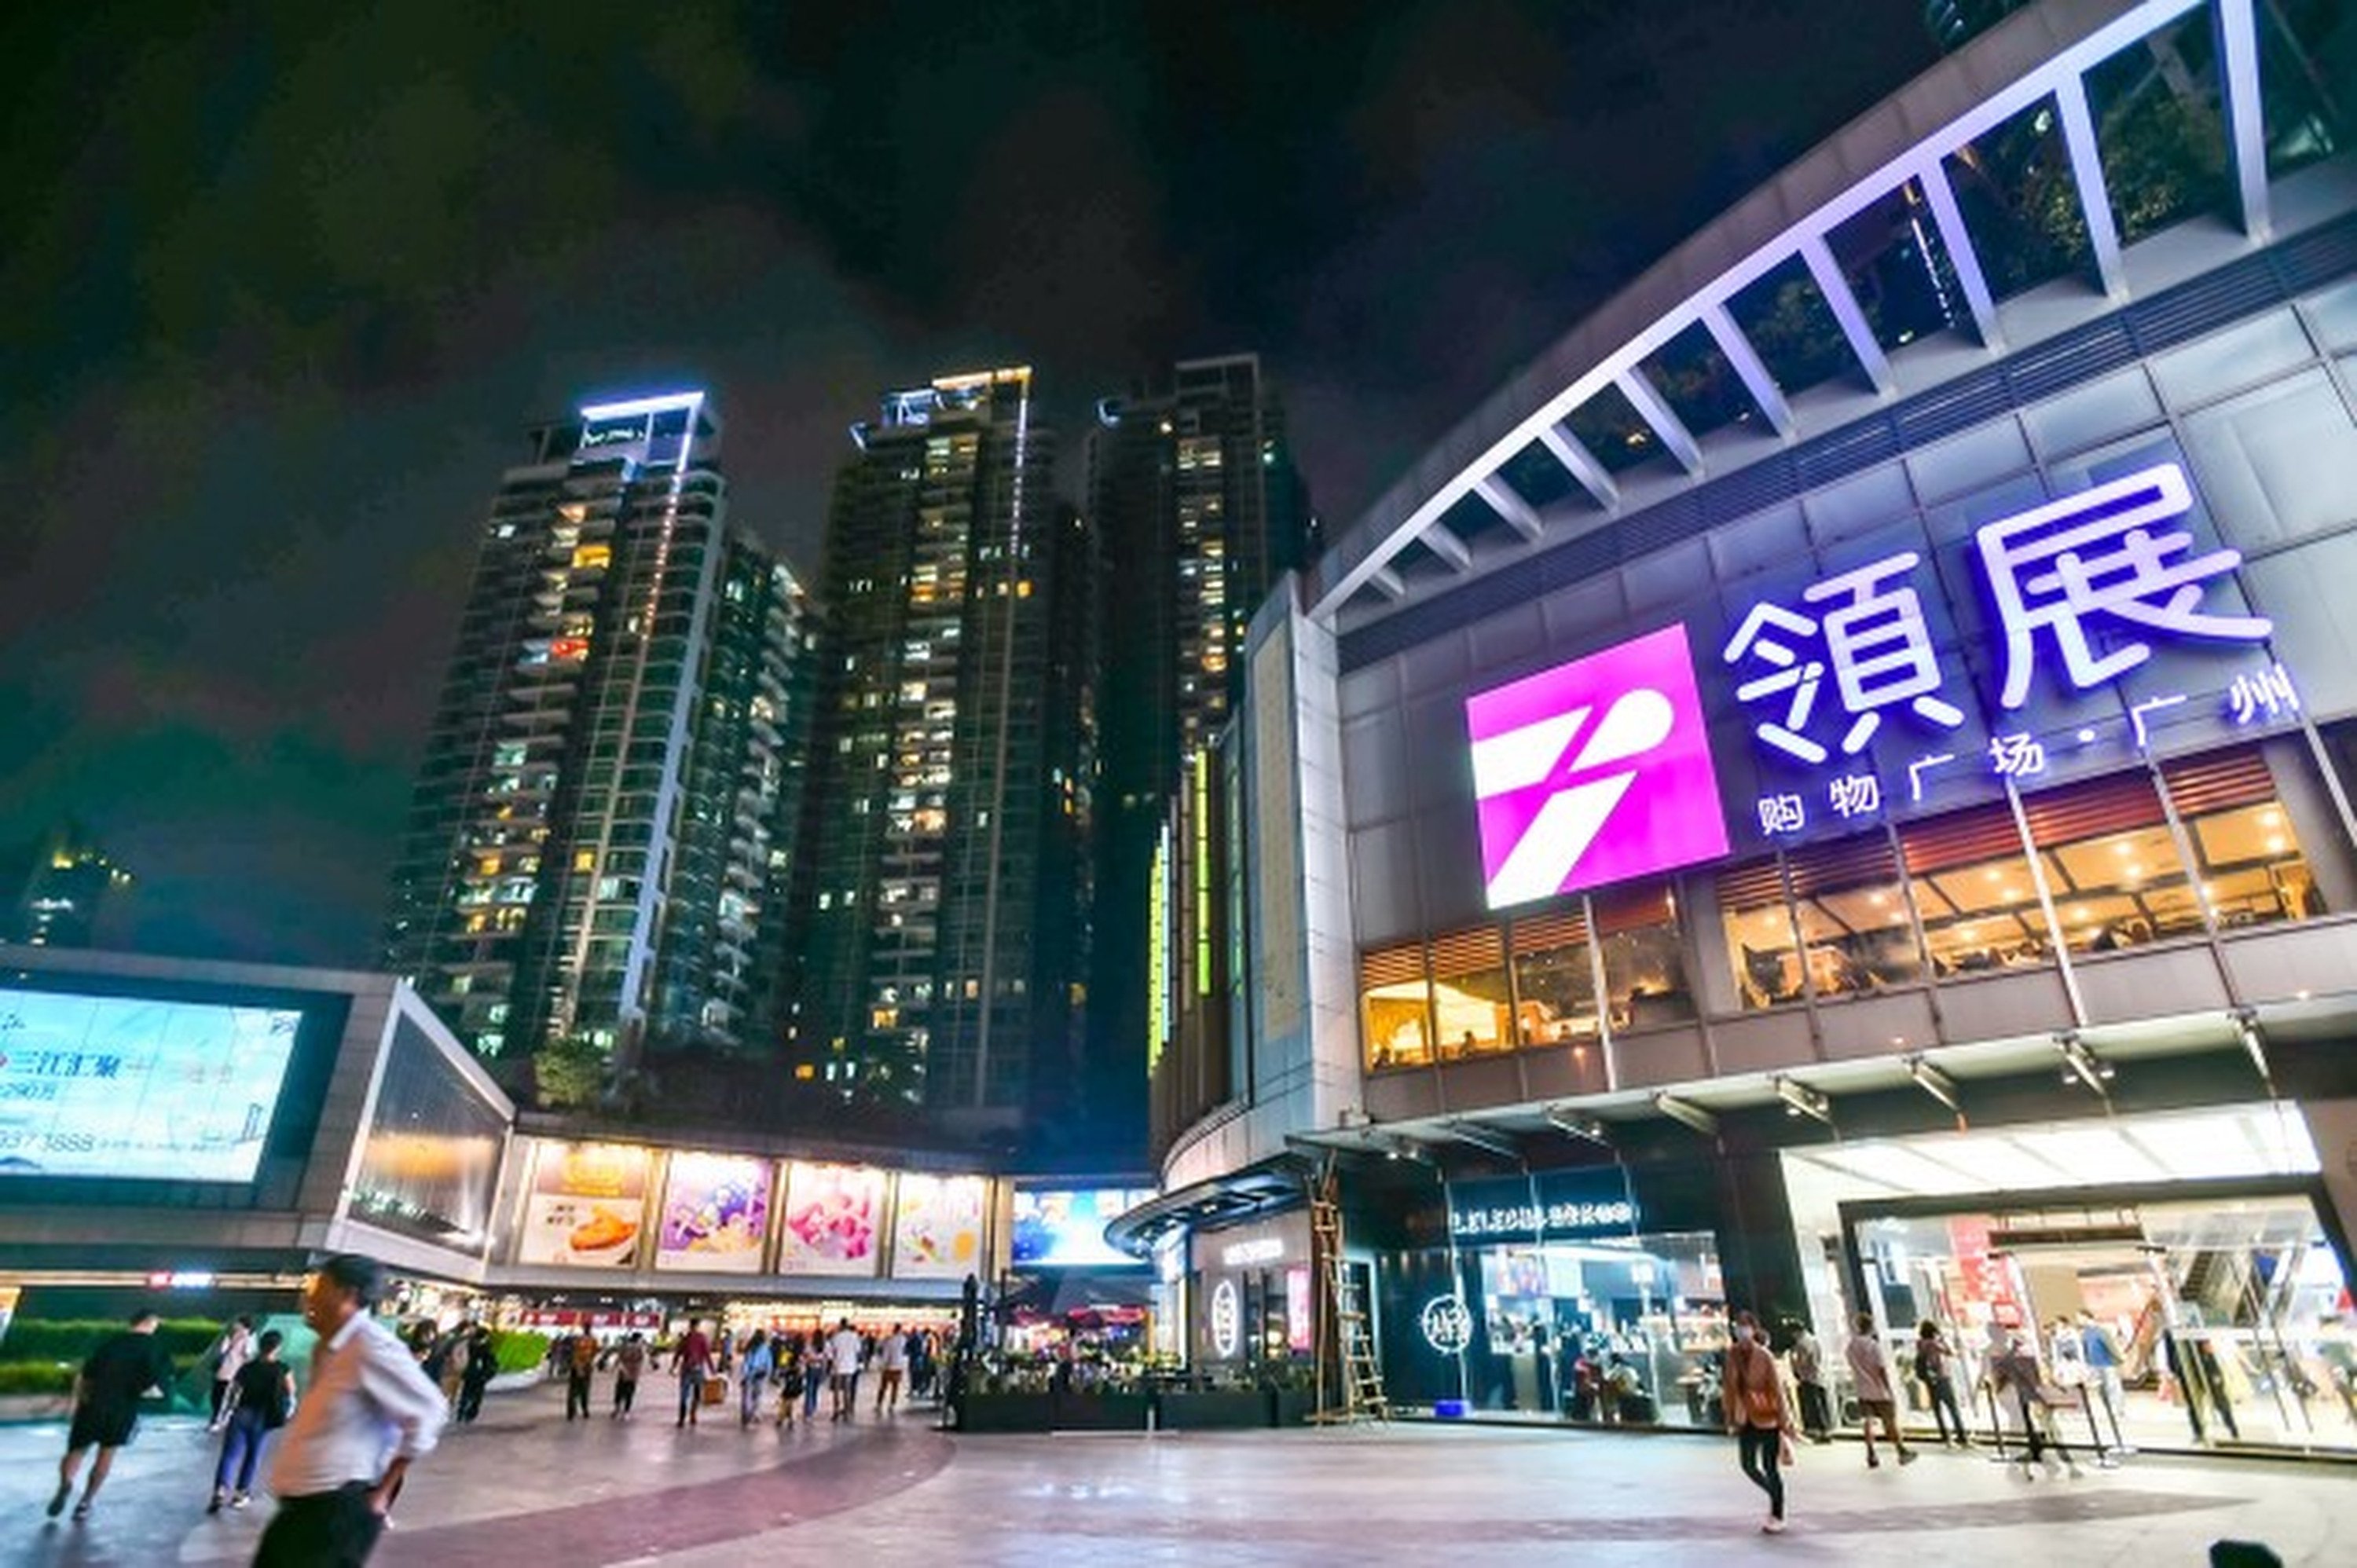 Link’s retail property in Guangzhou, recently rebranded as Link Plaza ⋅ Guangzhou. Photo: Handout